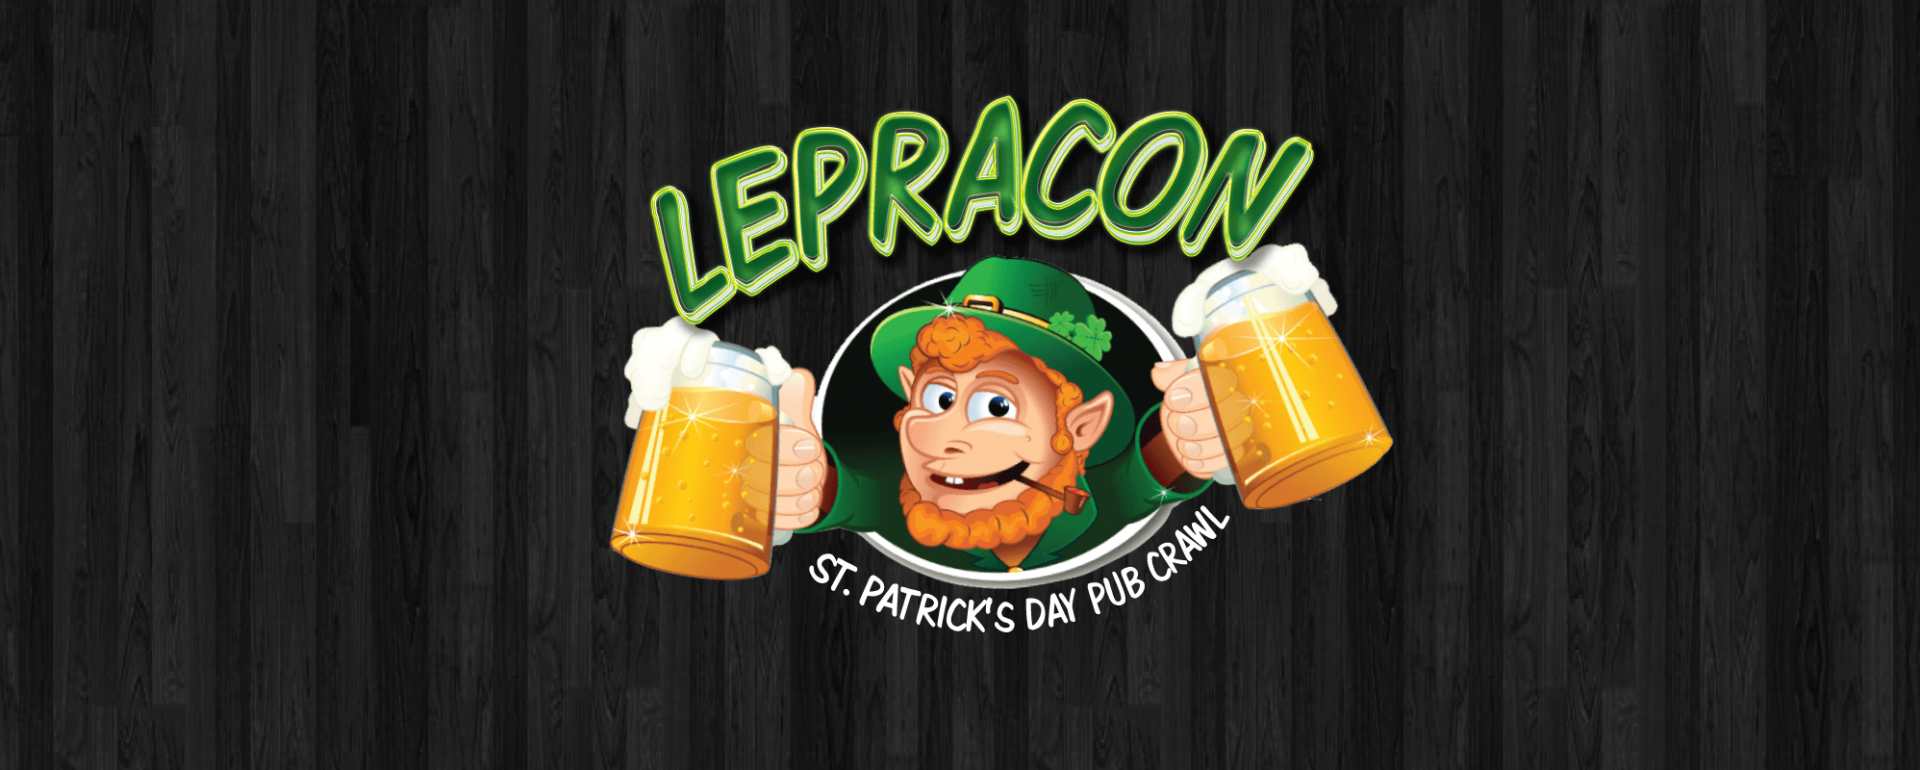 Lepracon the St. Patrick's Day Pub Crawl